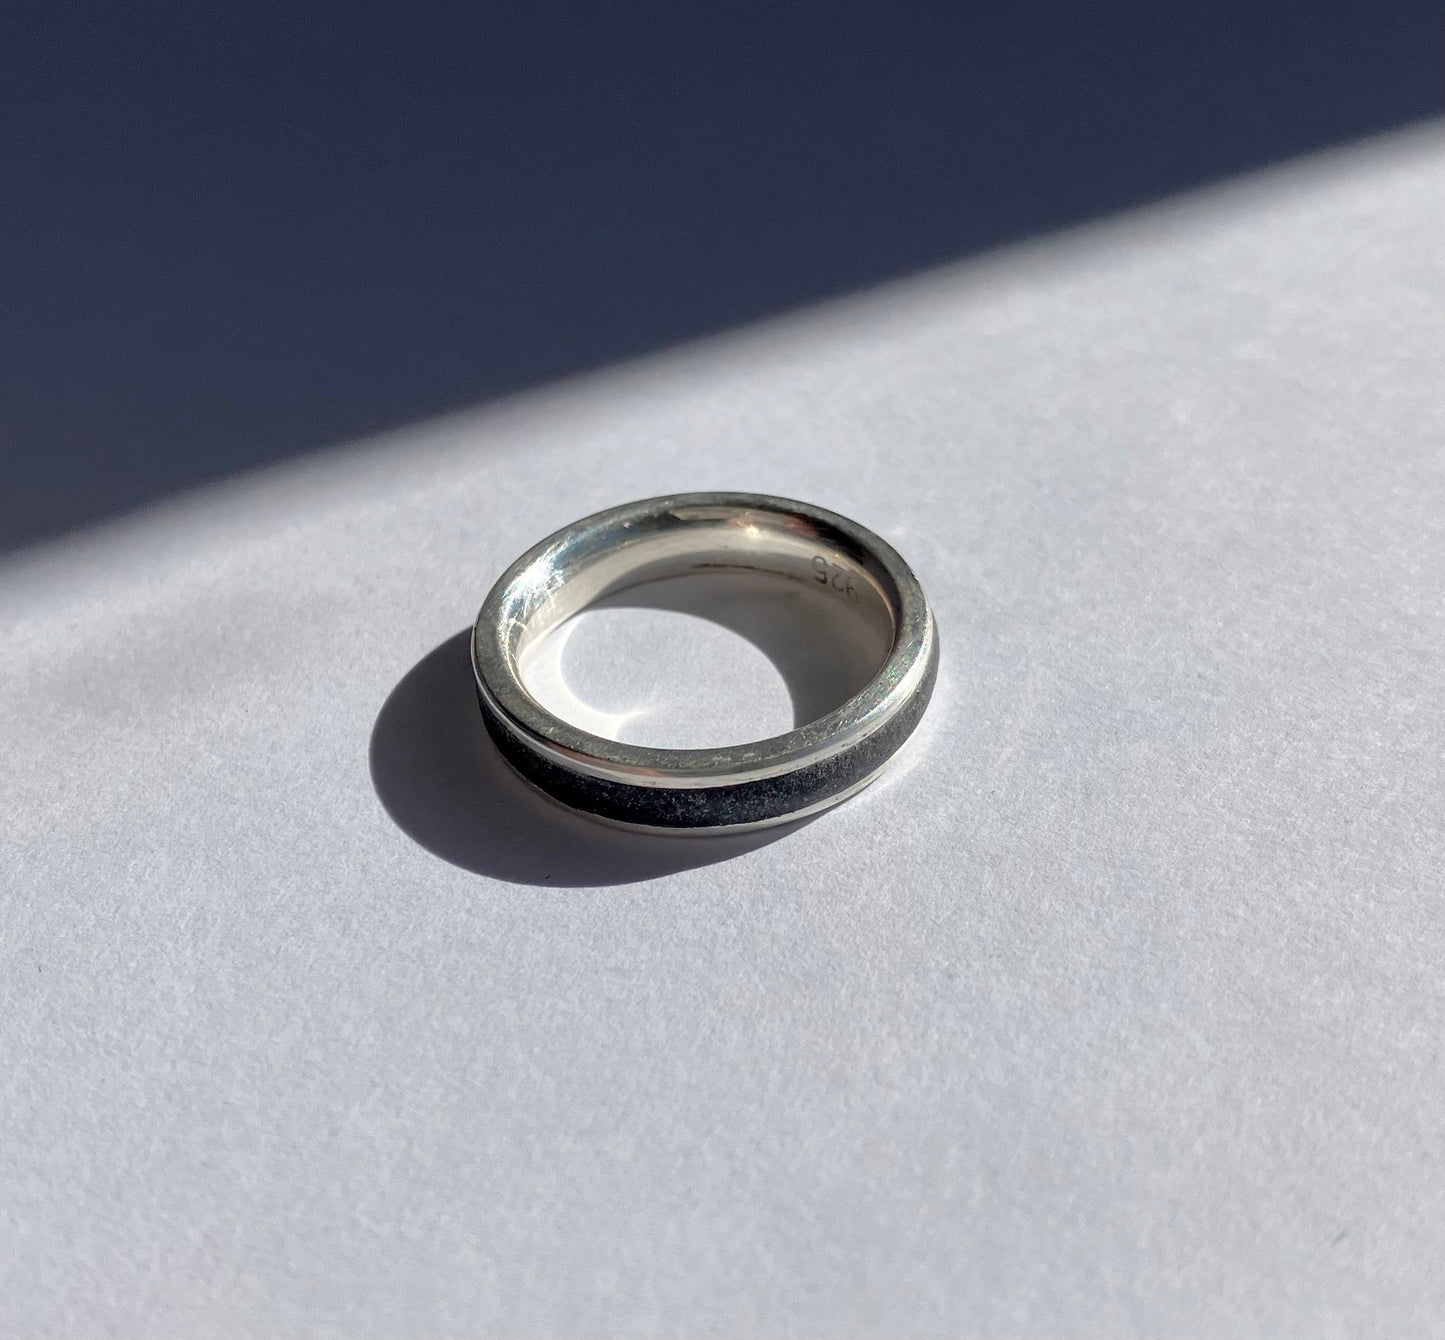 Minimal Elegance - Gray Minimalist Ring with Concrete Inlay